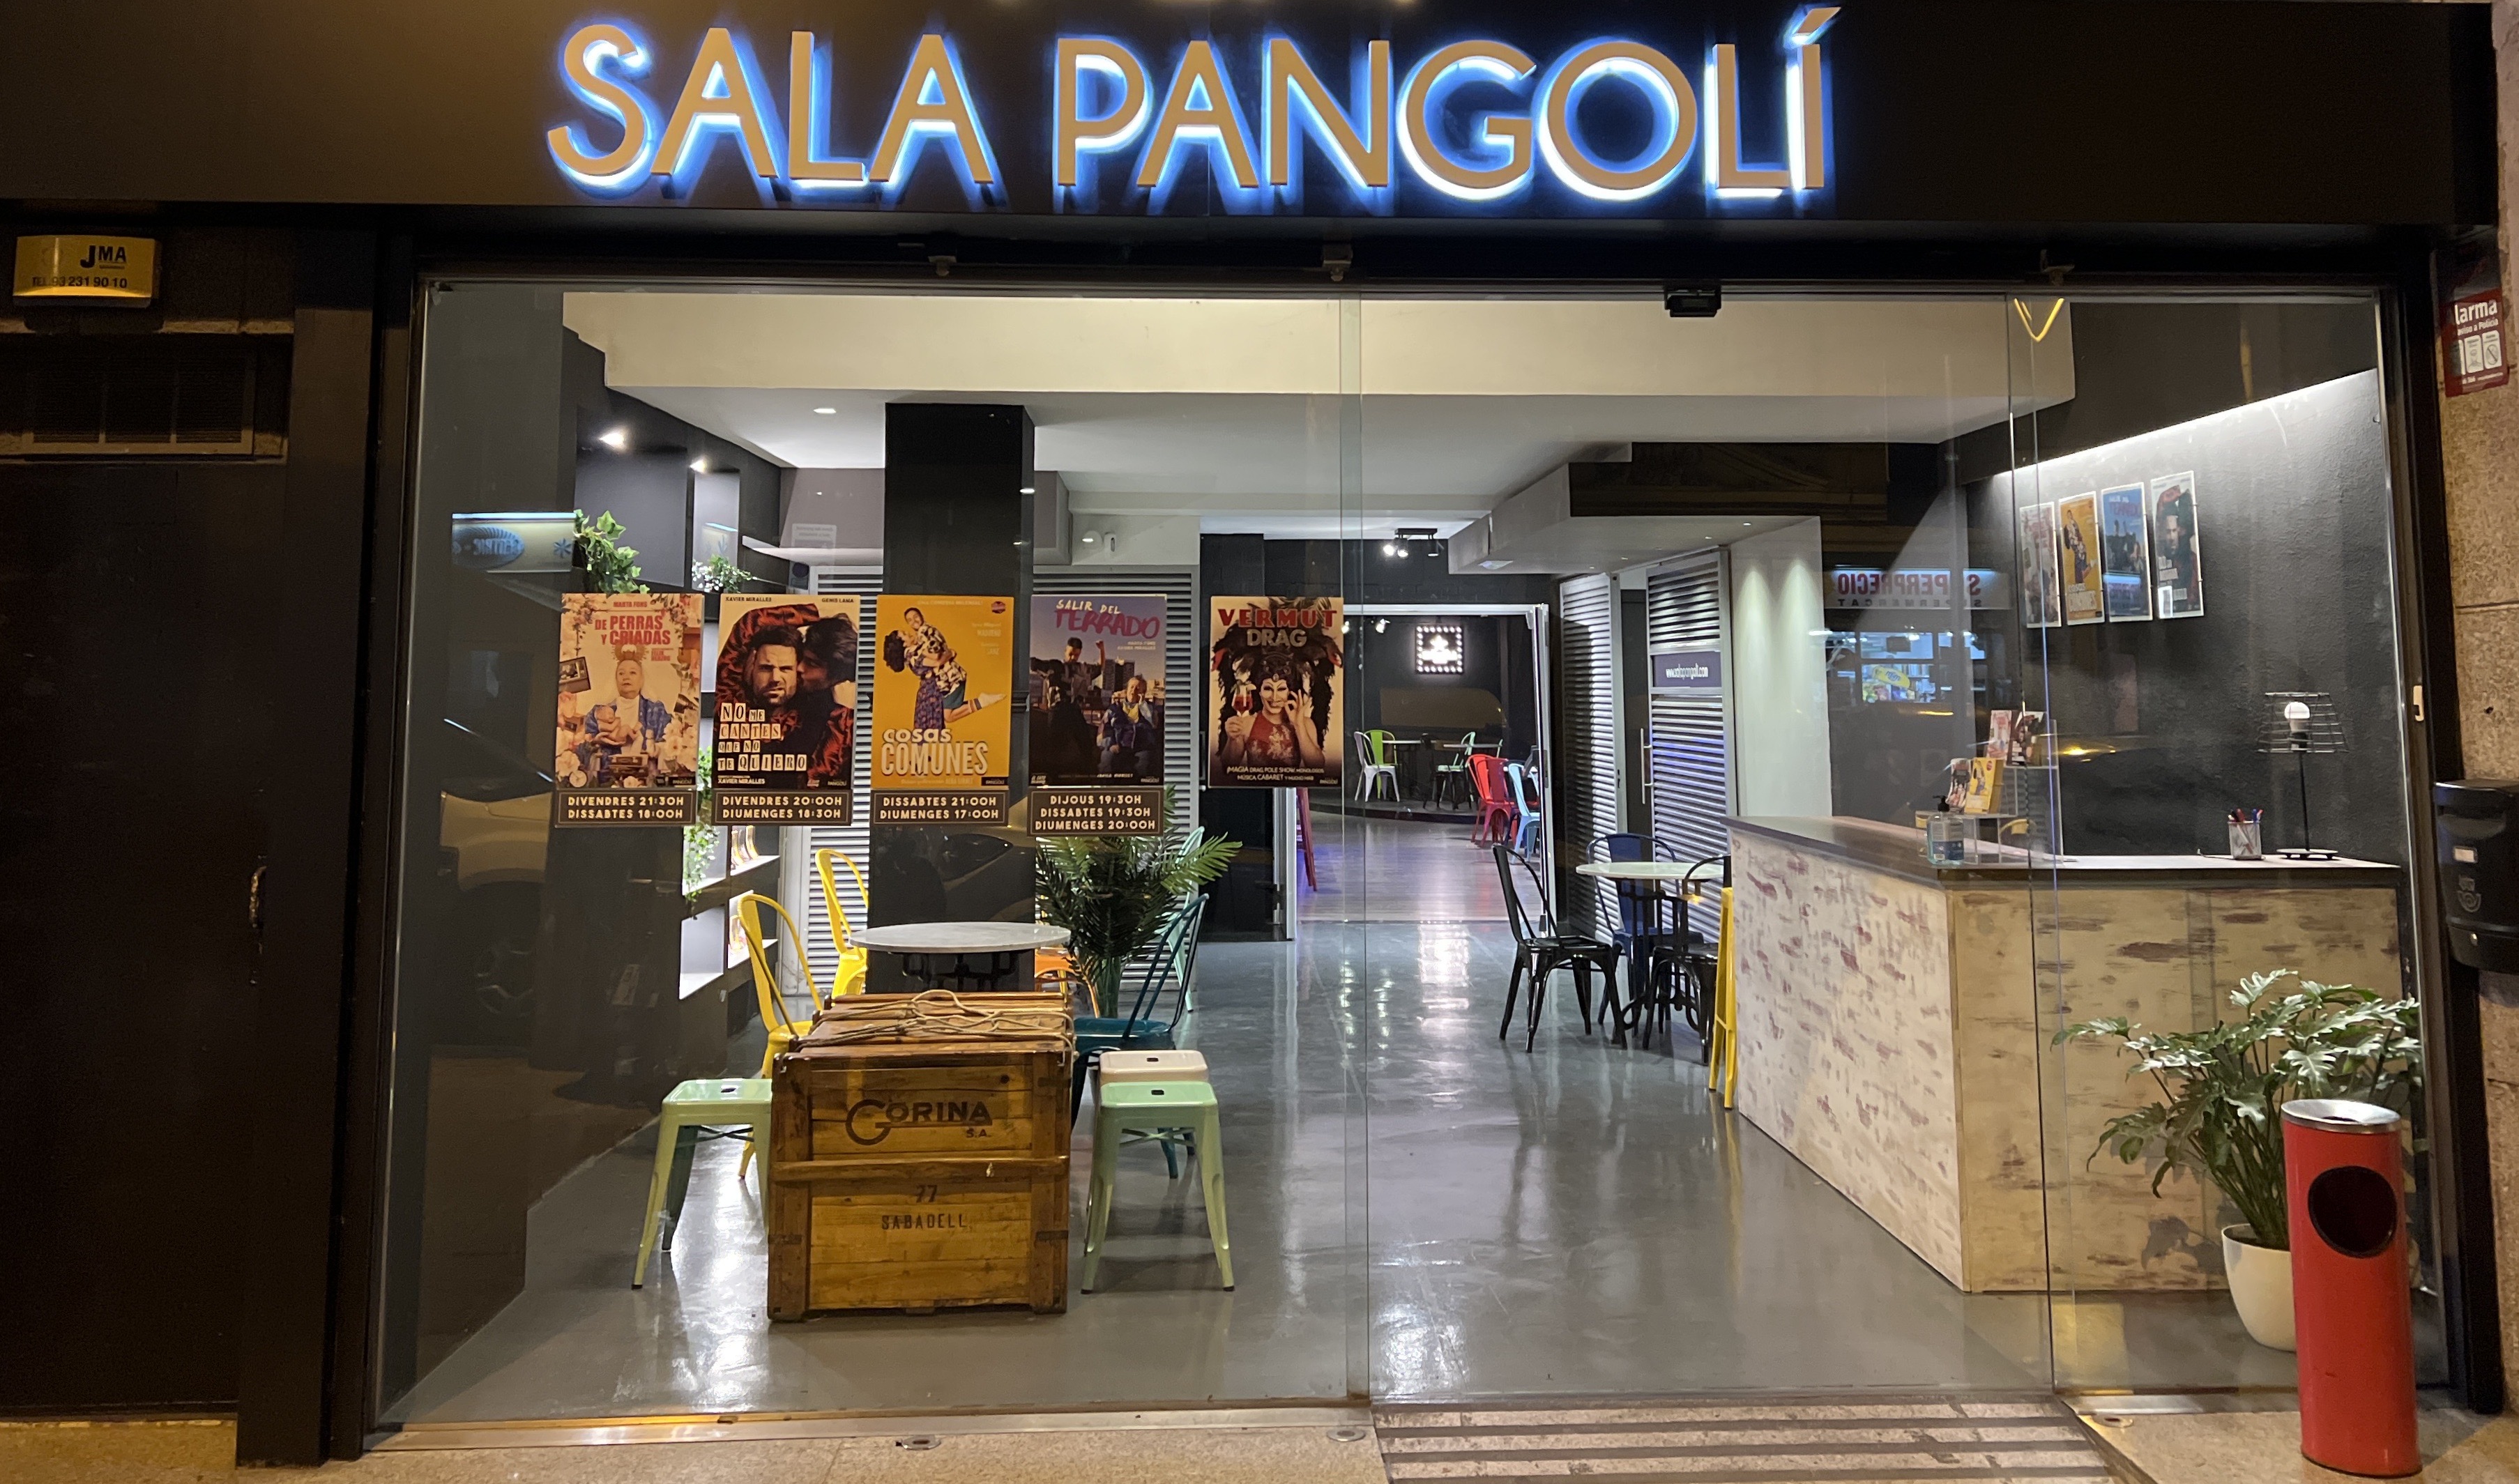 Sala Pangolí